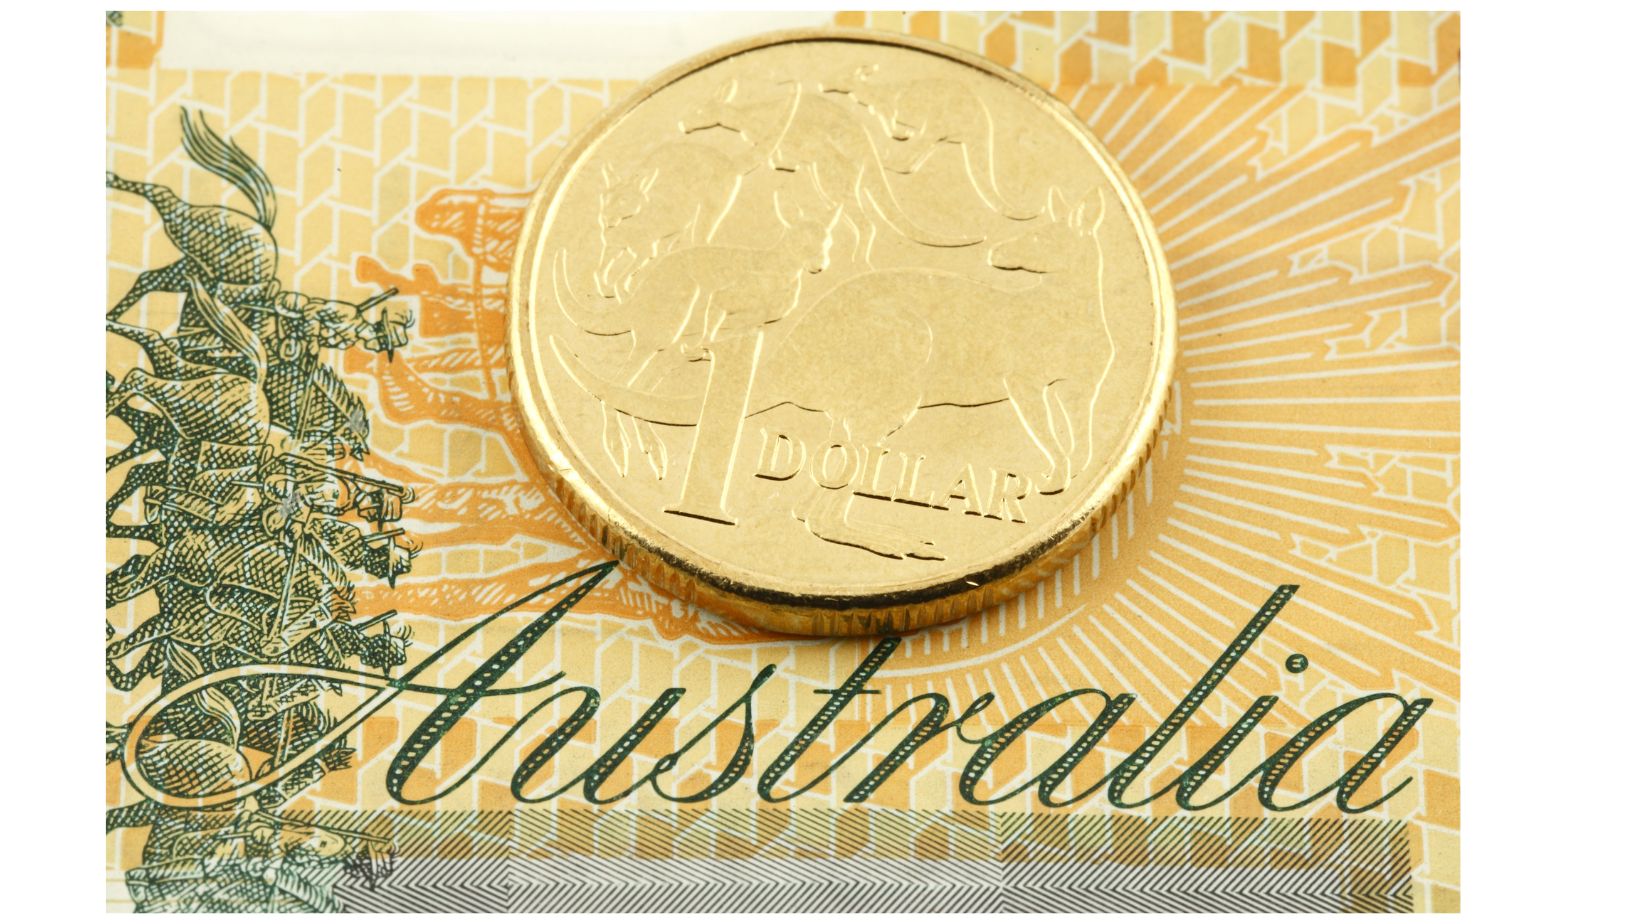 1 австралийский доллар — австралийский доллар